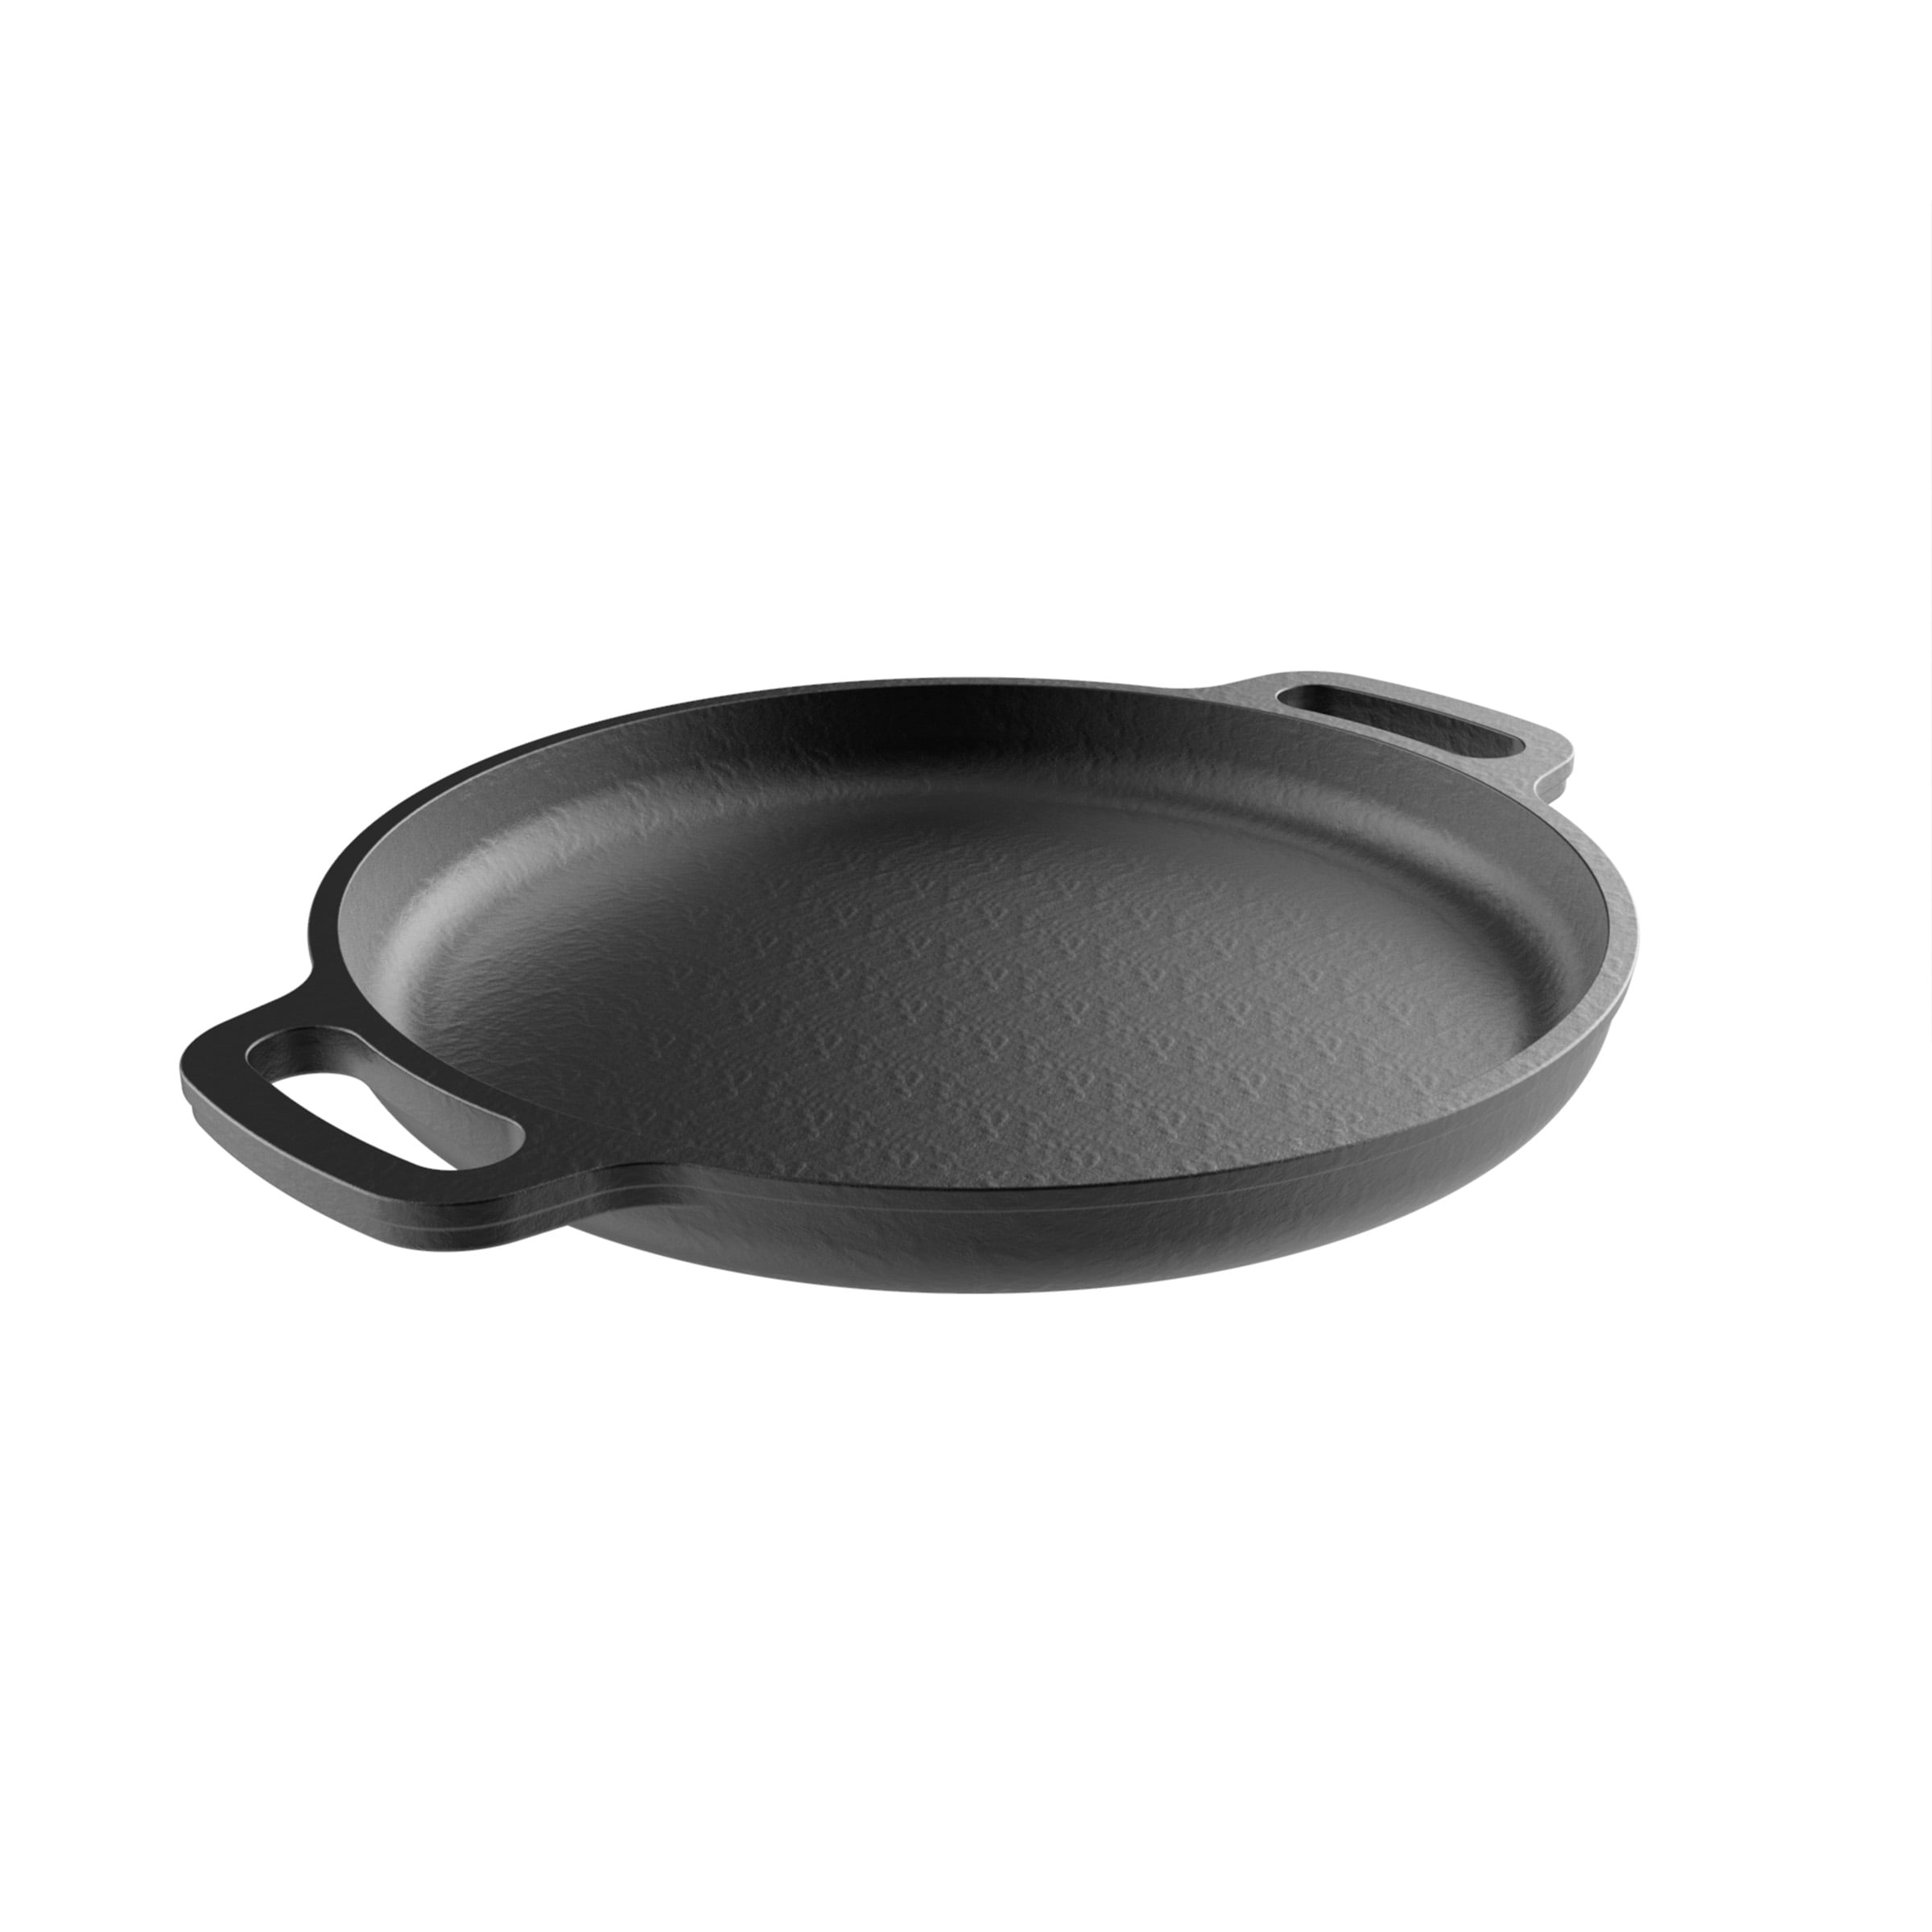 Cuisine & Company 10.25 Enameled Cast Iron Pie Pan Baking Cooking 1.5 Qt  NEW